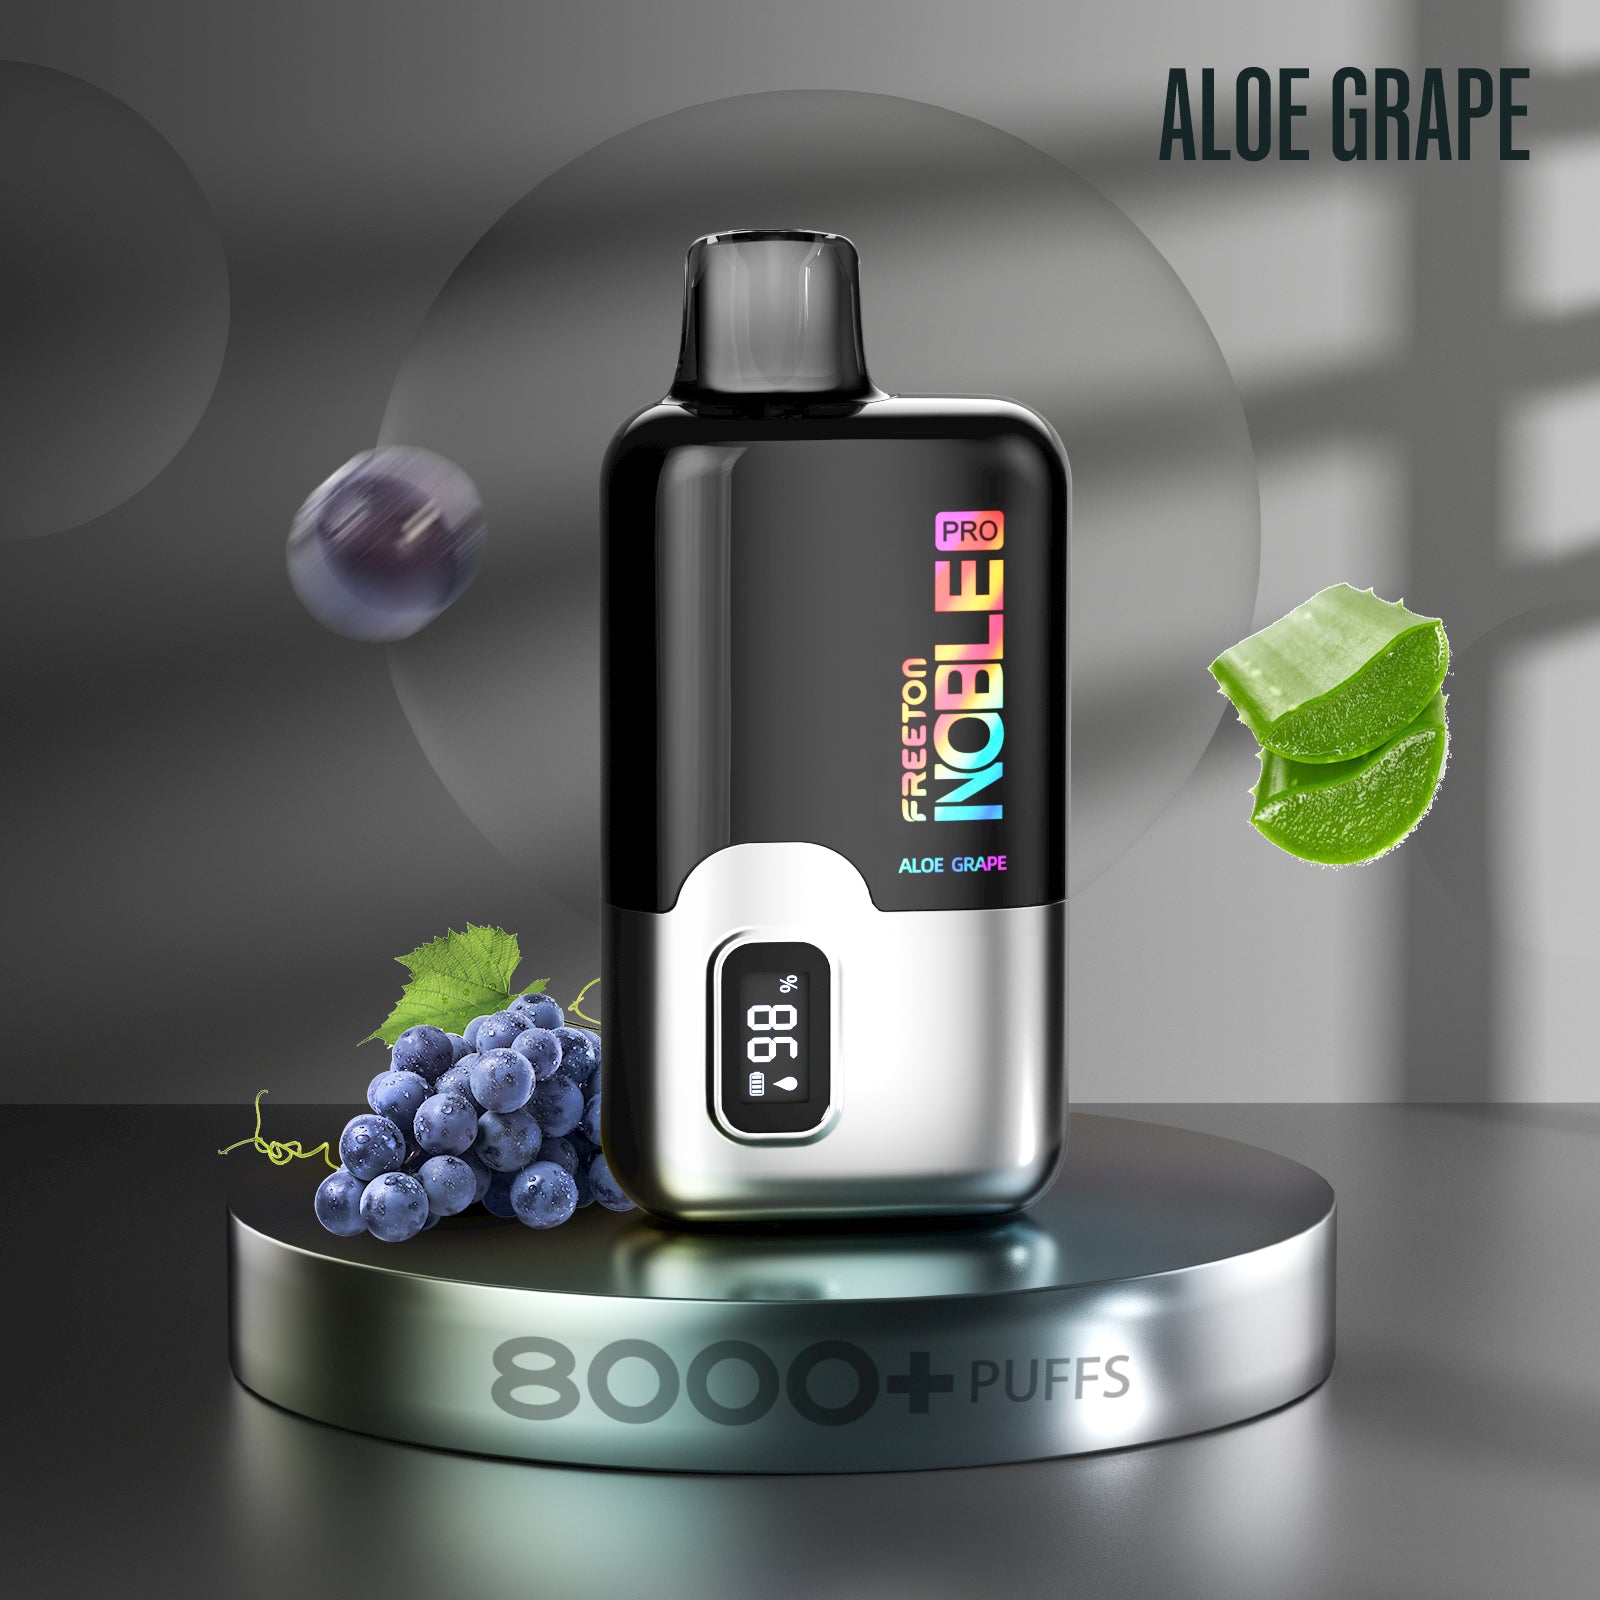 Freeton Noble Pro Aloe Grape 8000+  Puffs